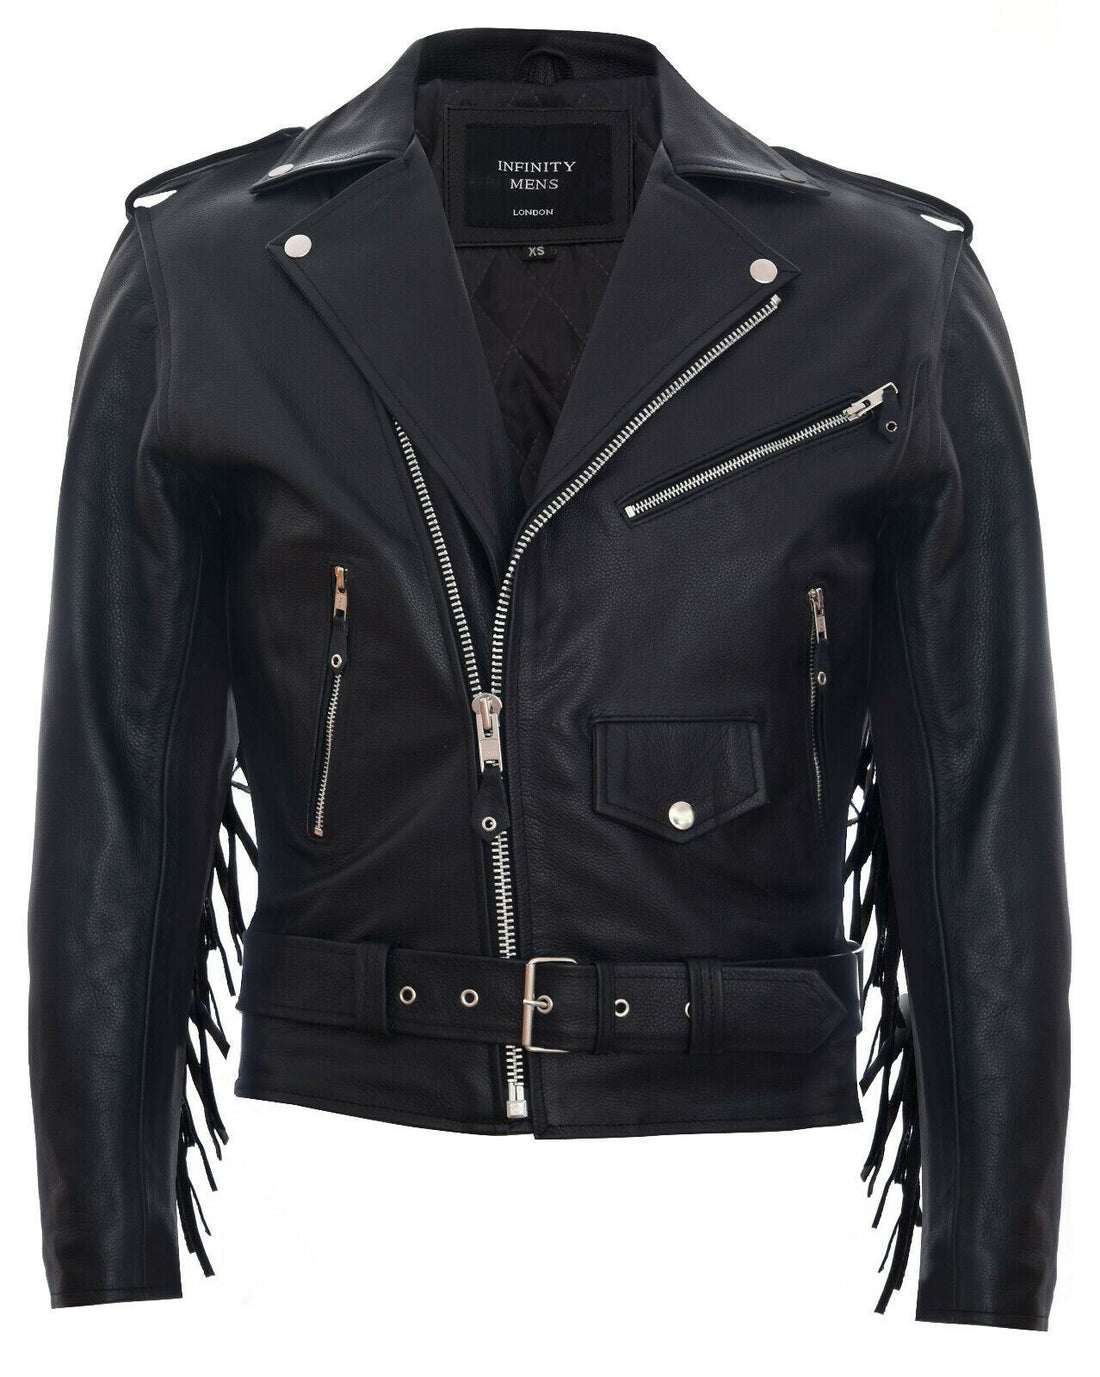 Mens Fringe Hide Leather Biker Jacket- Sevenoaks in White - Upperclass Fashions 